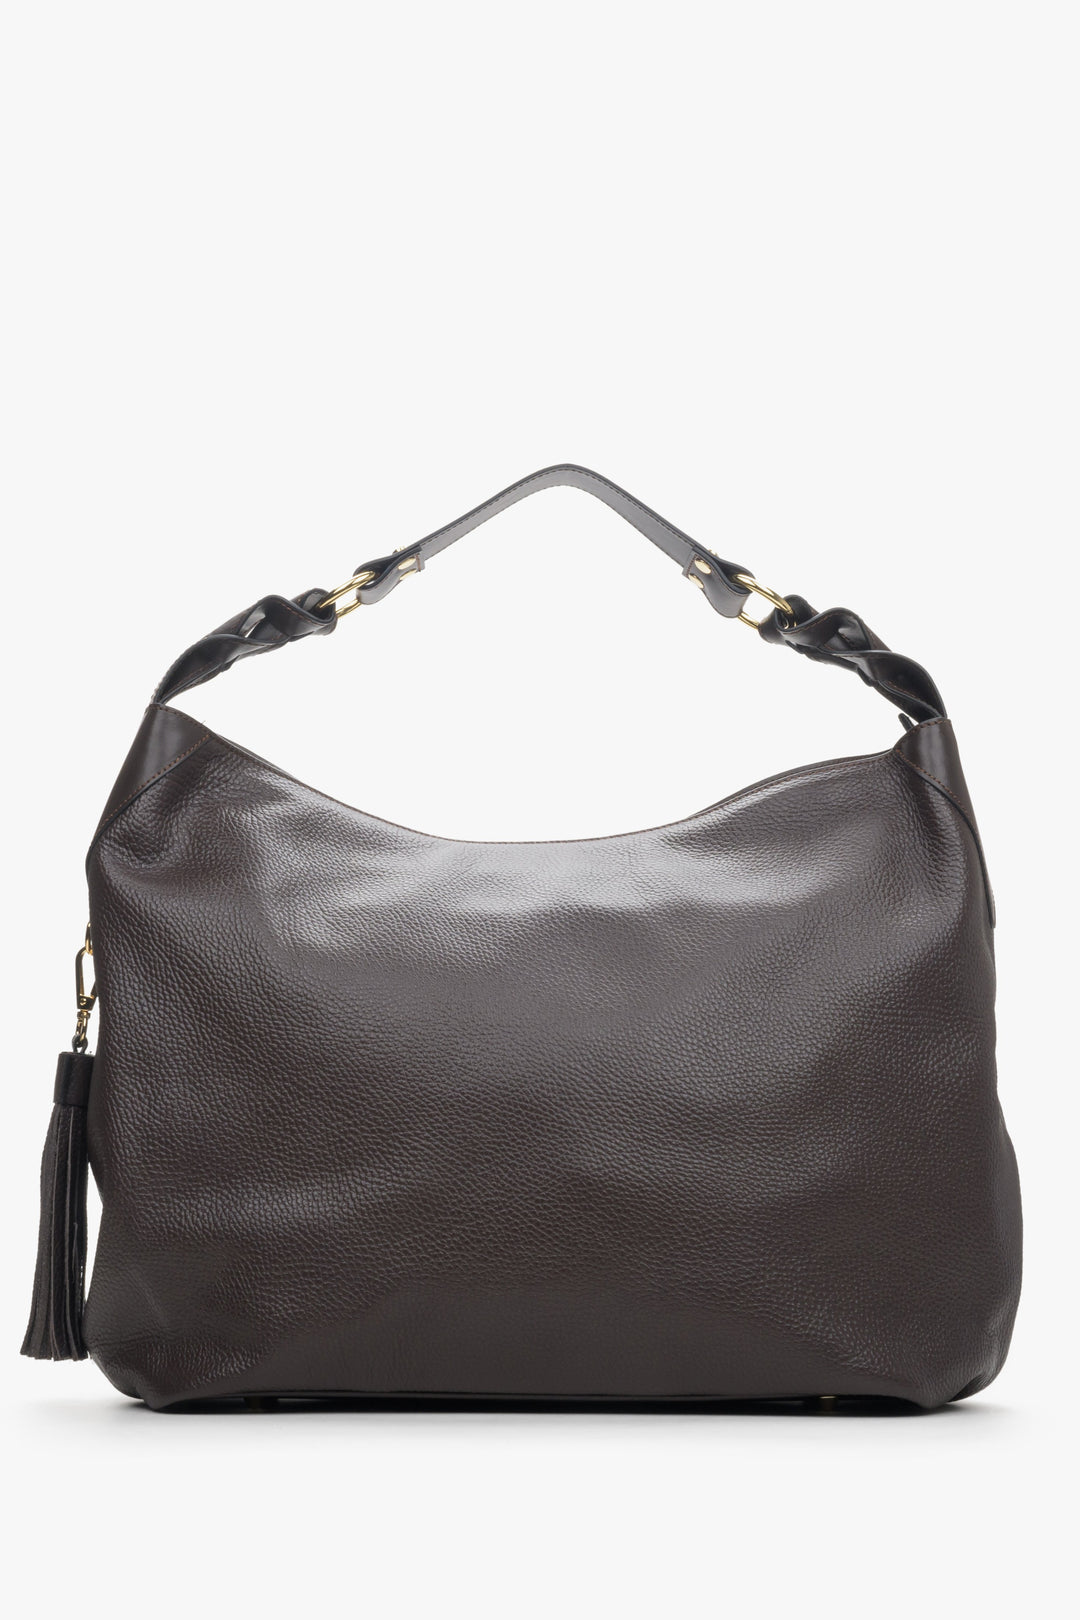 Women's dark brown leather  hobo bag by Estro.